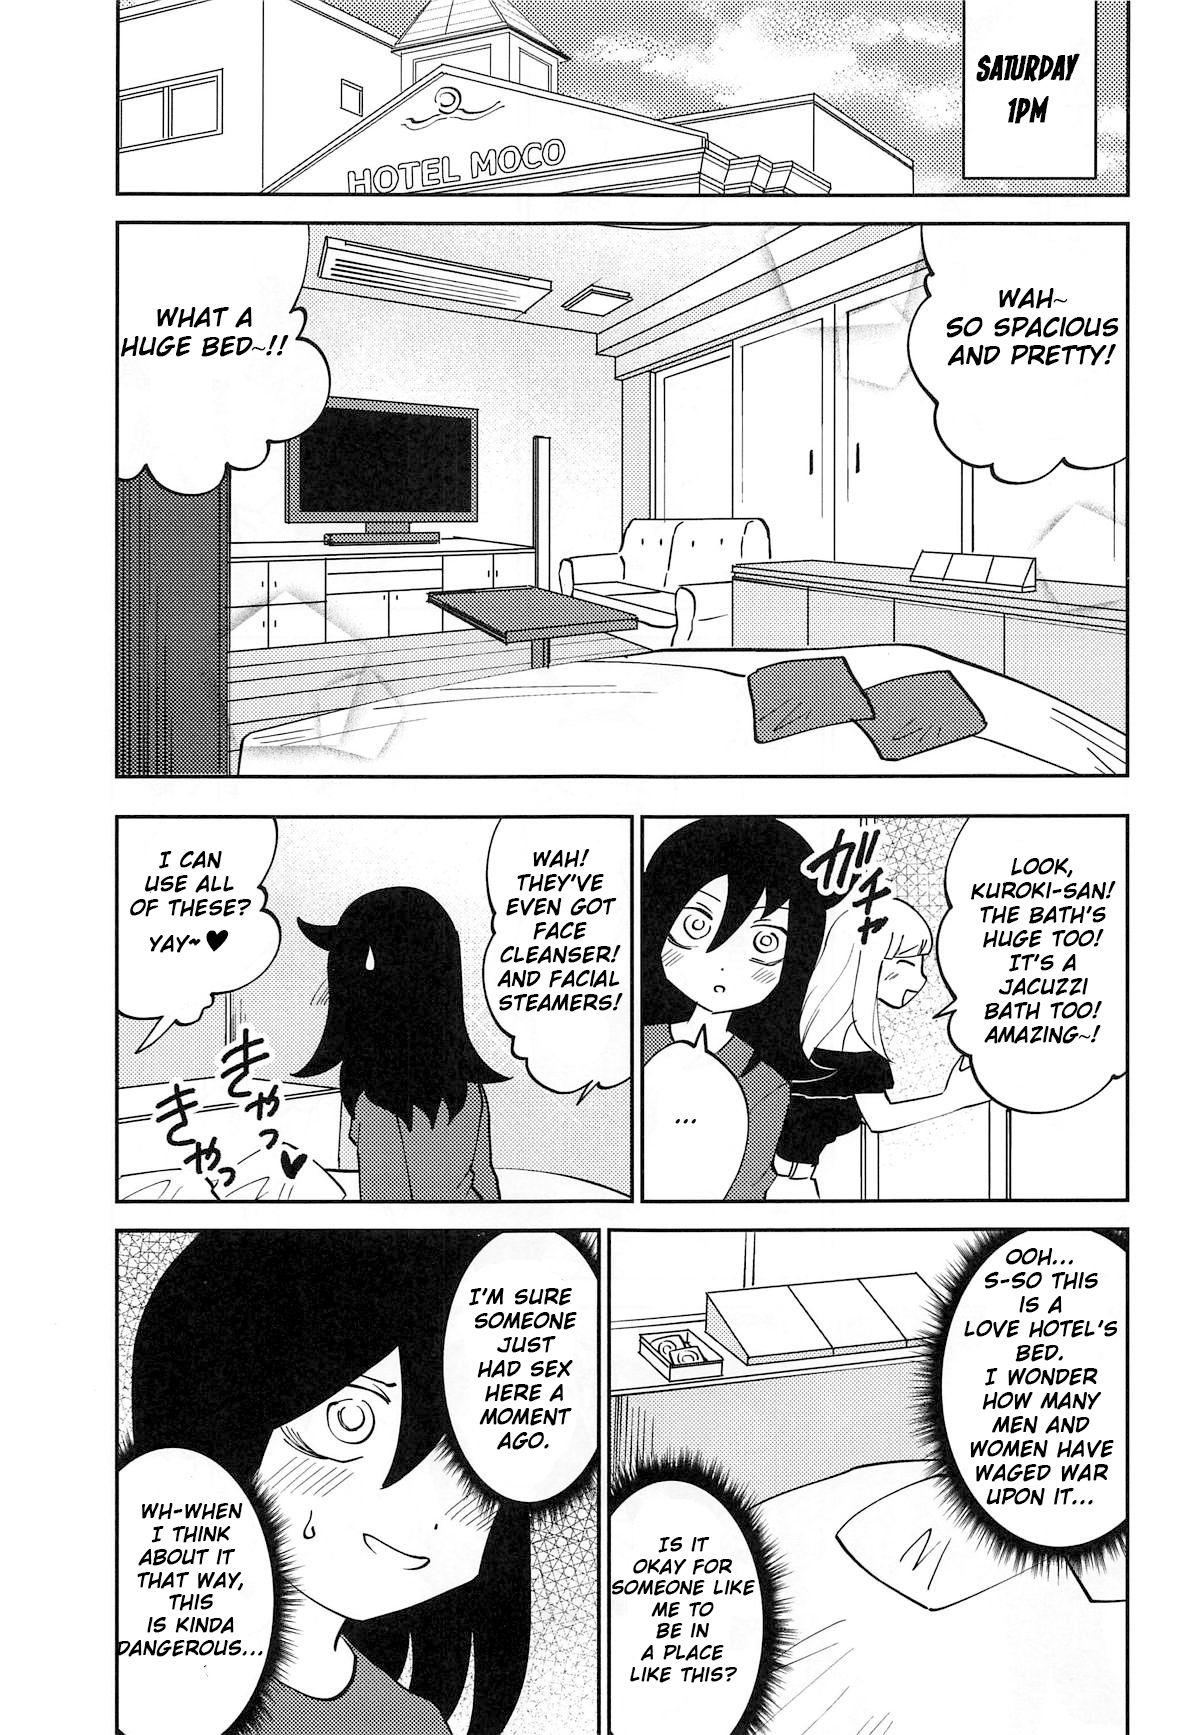 Cream Kuroki-san, Anone. - Its not my fault that im not popular Rimming - Page 6